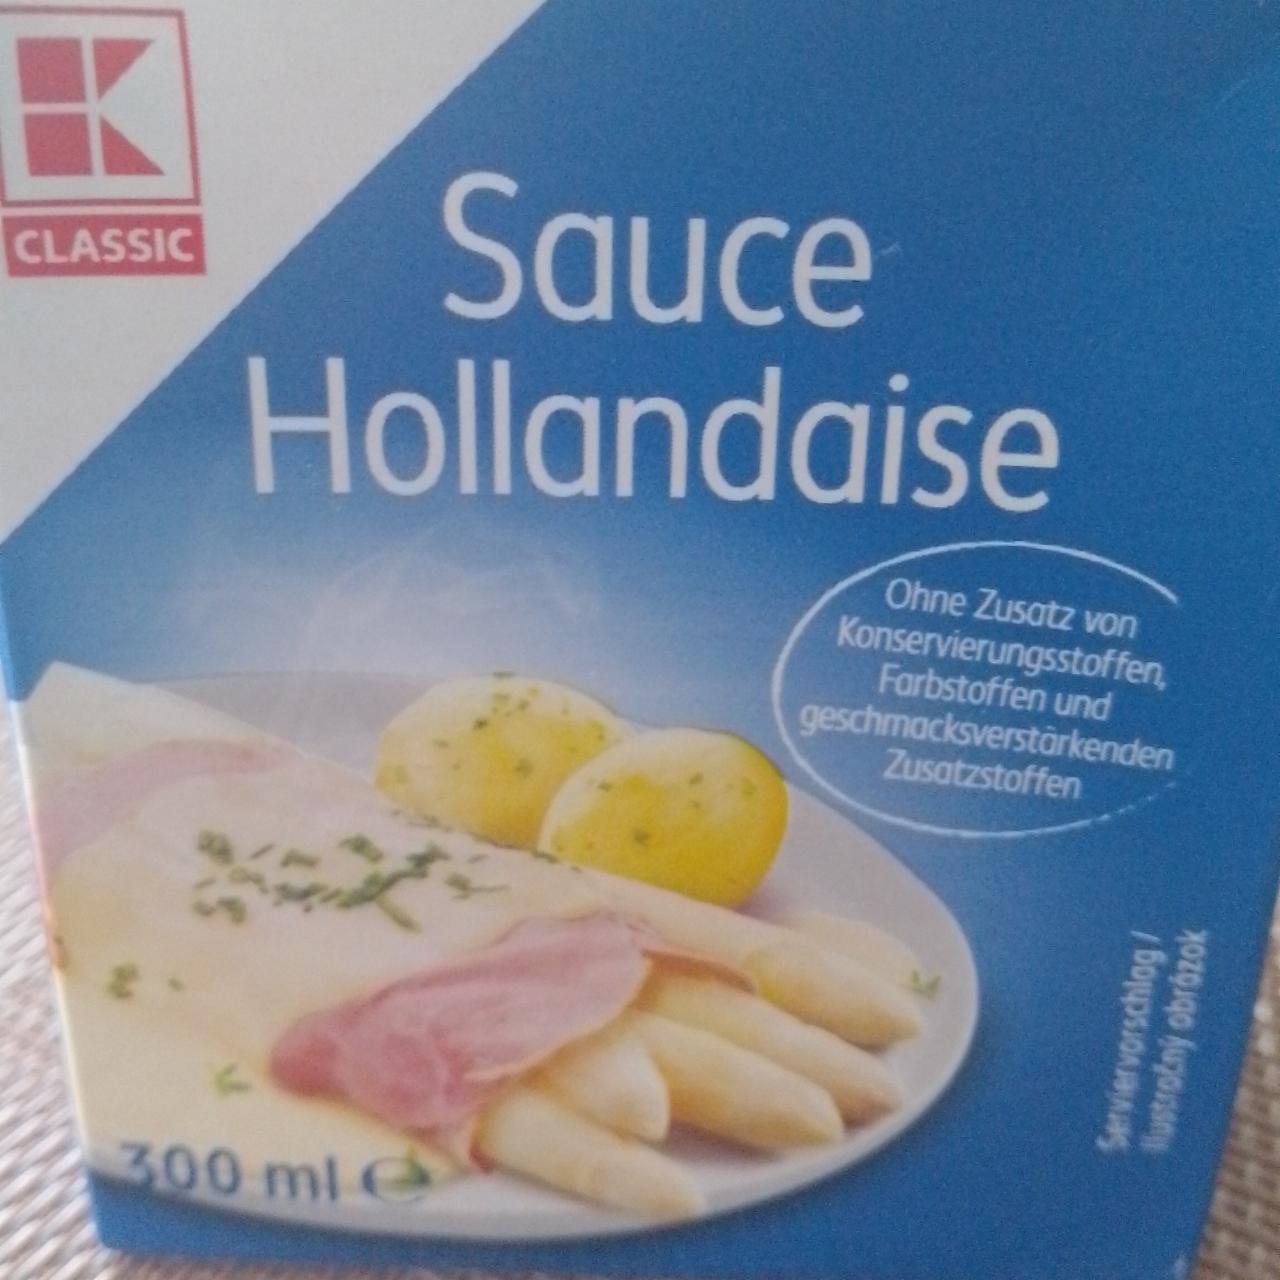 Фото - Sauce Hollandaise K-Classic